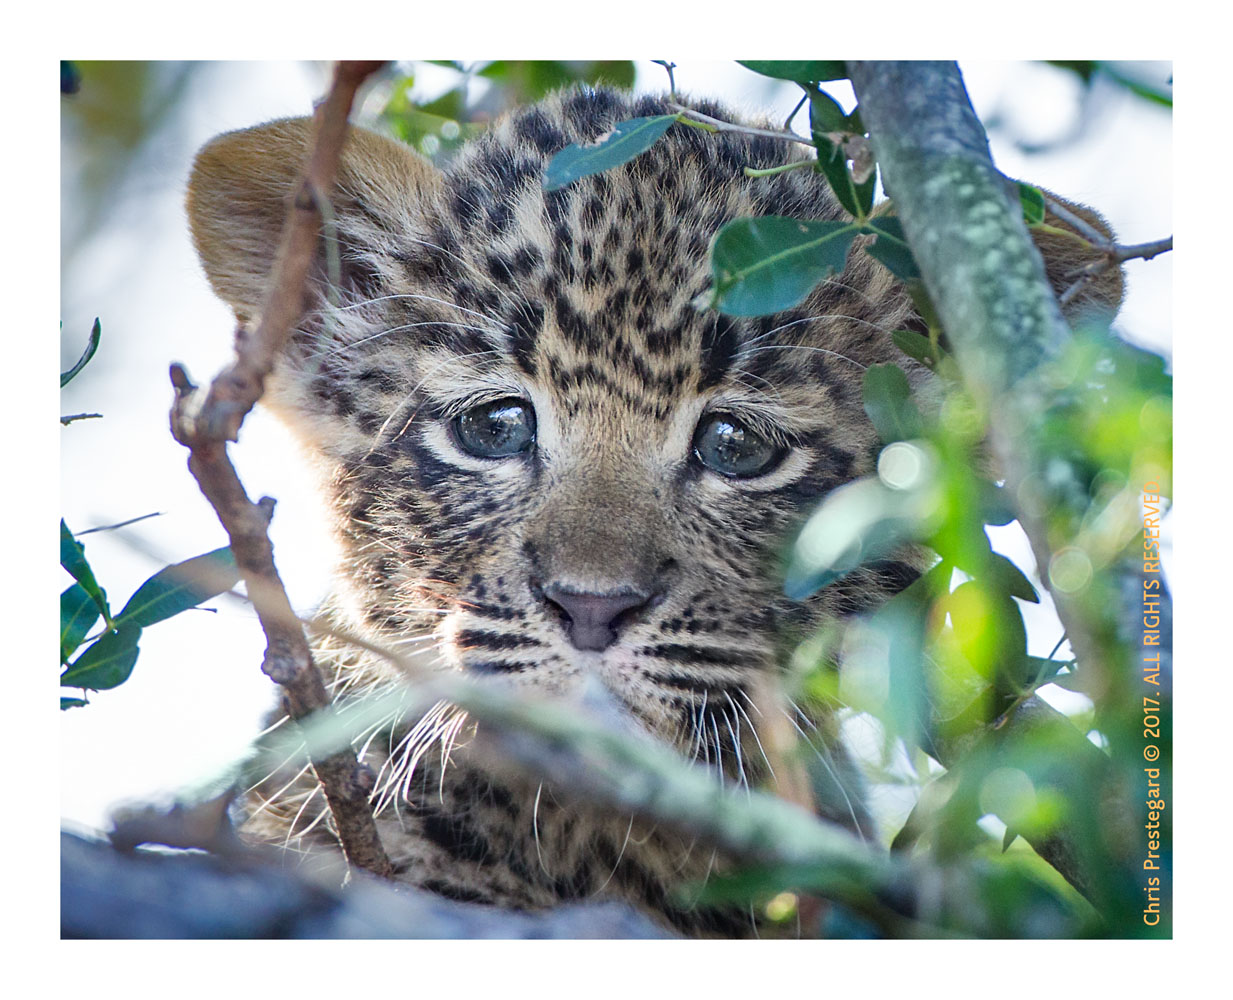 Leopard Cub, South Africa July 2012